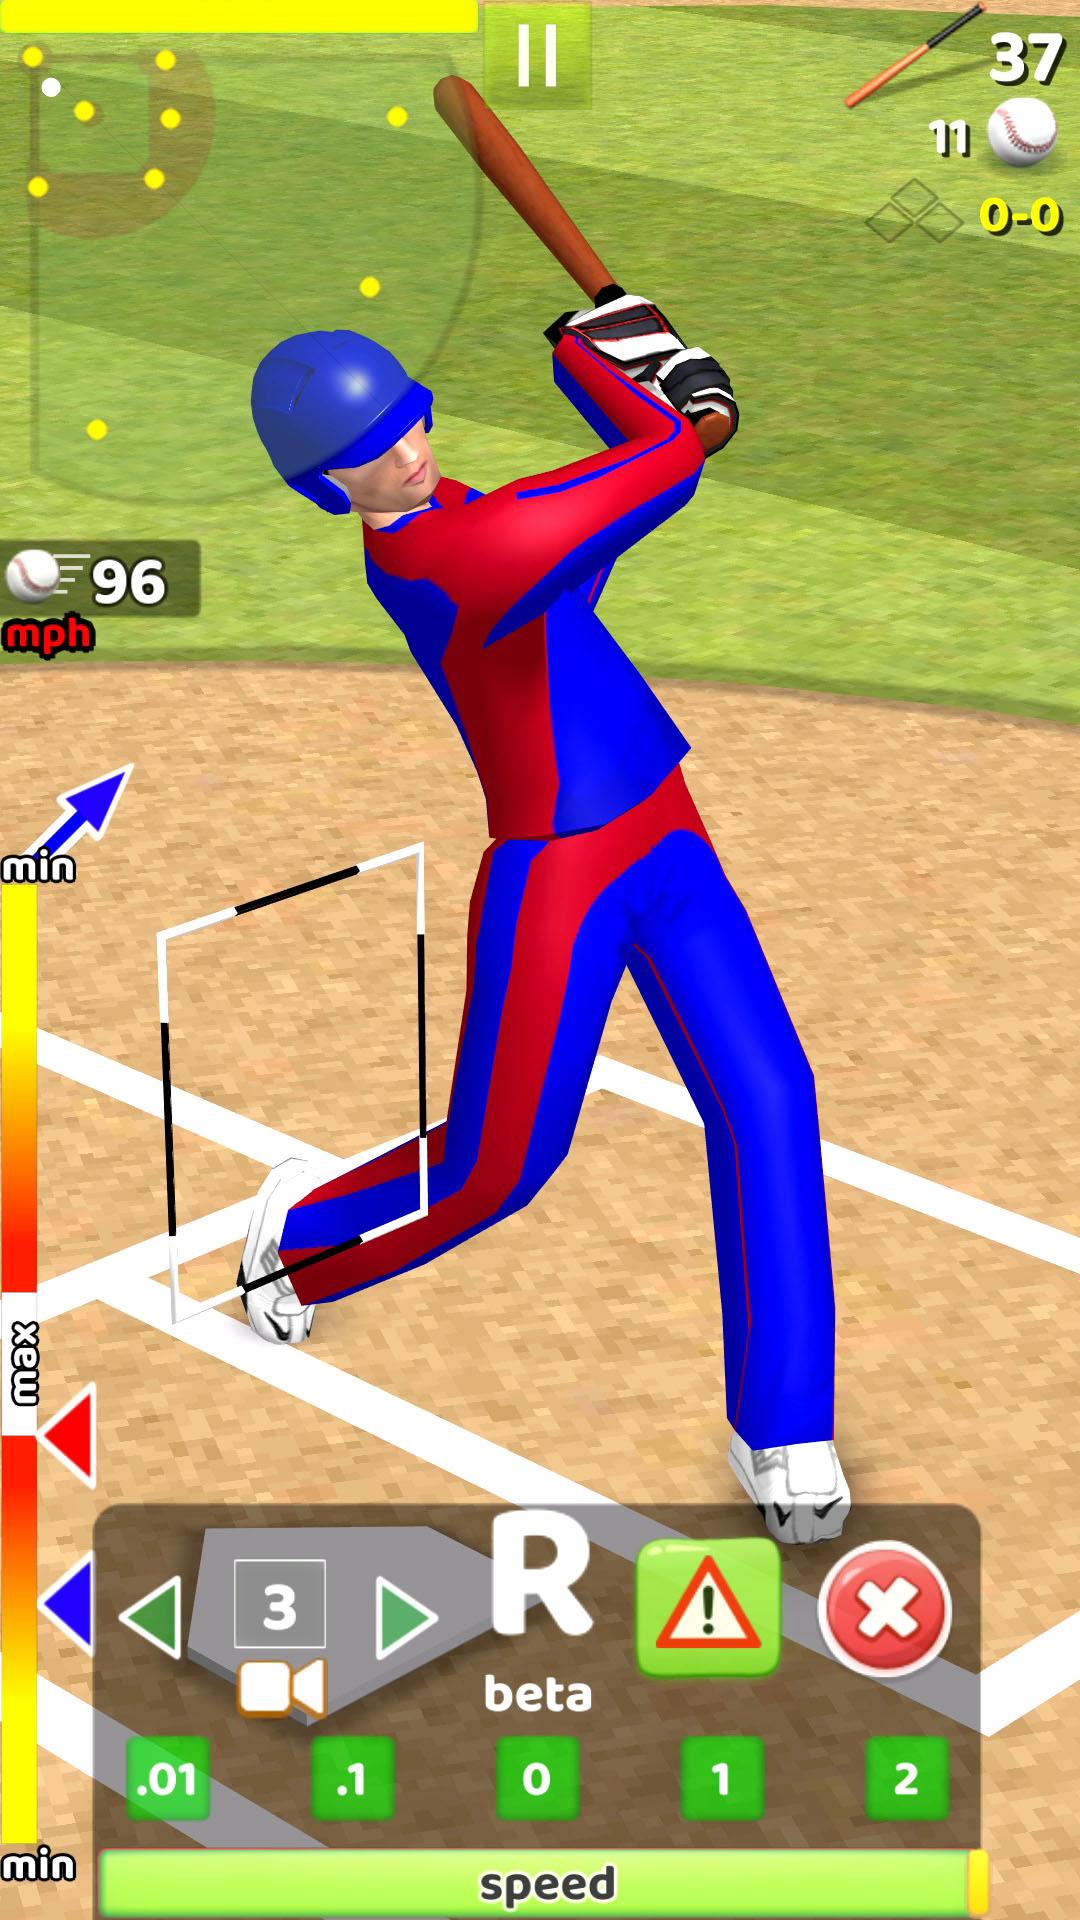 Smashing Baseball a baseball game like none other 1.0.6 Screenshot 1